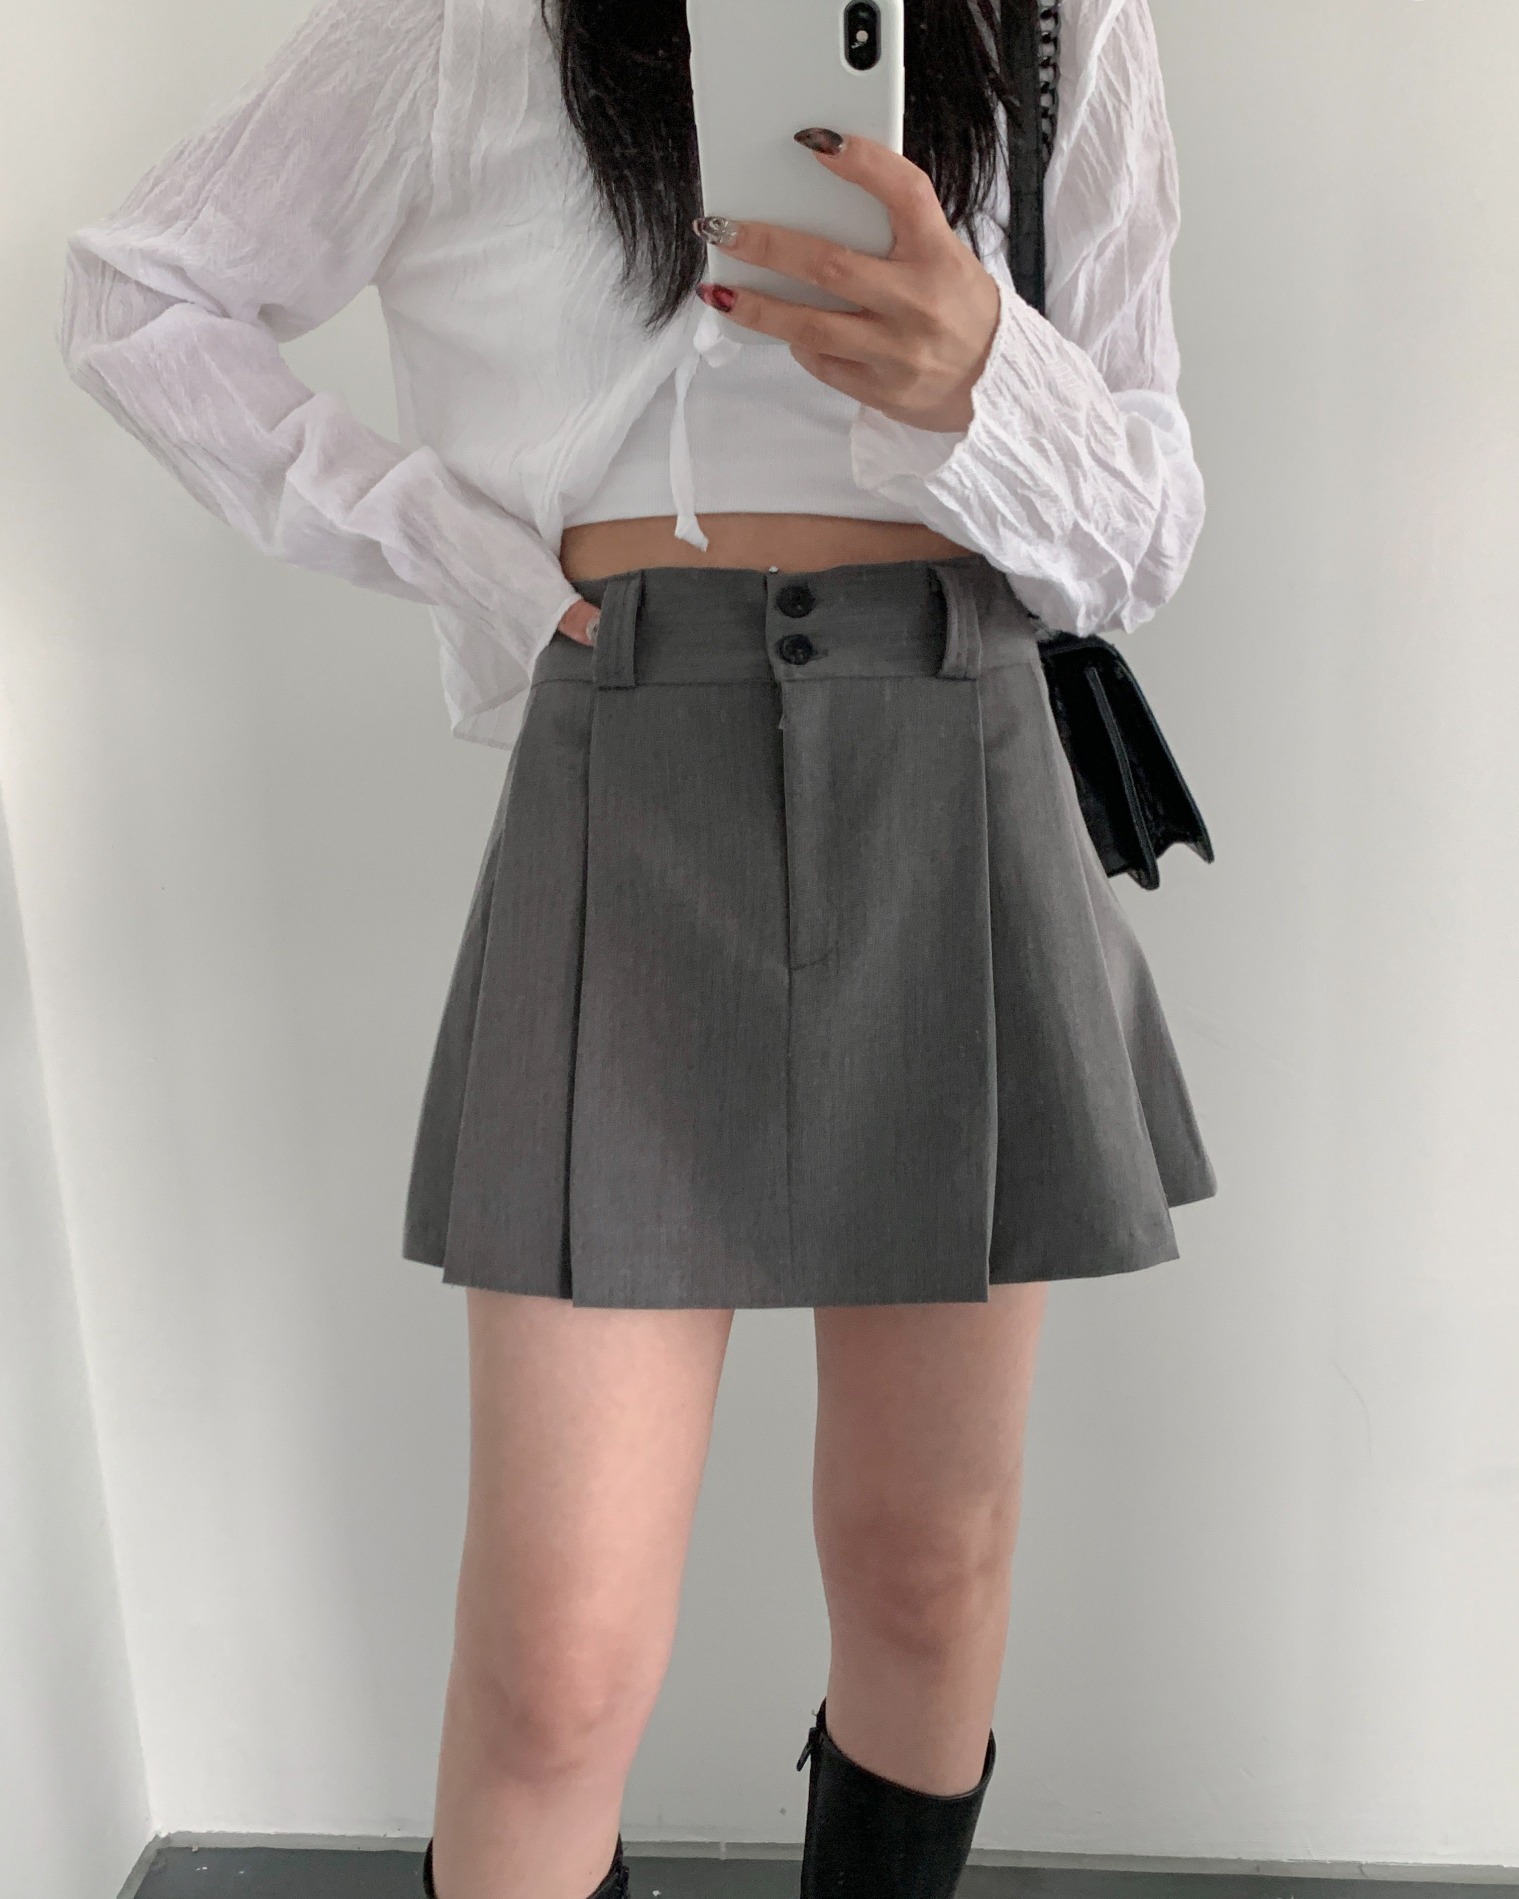 Low waist minimal skirts